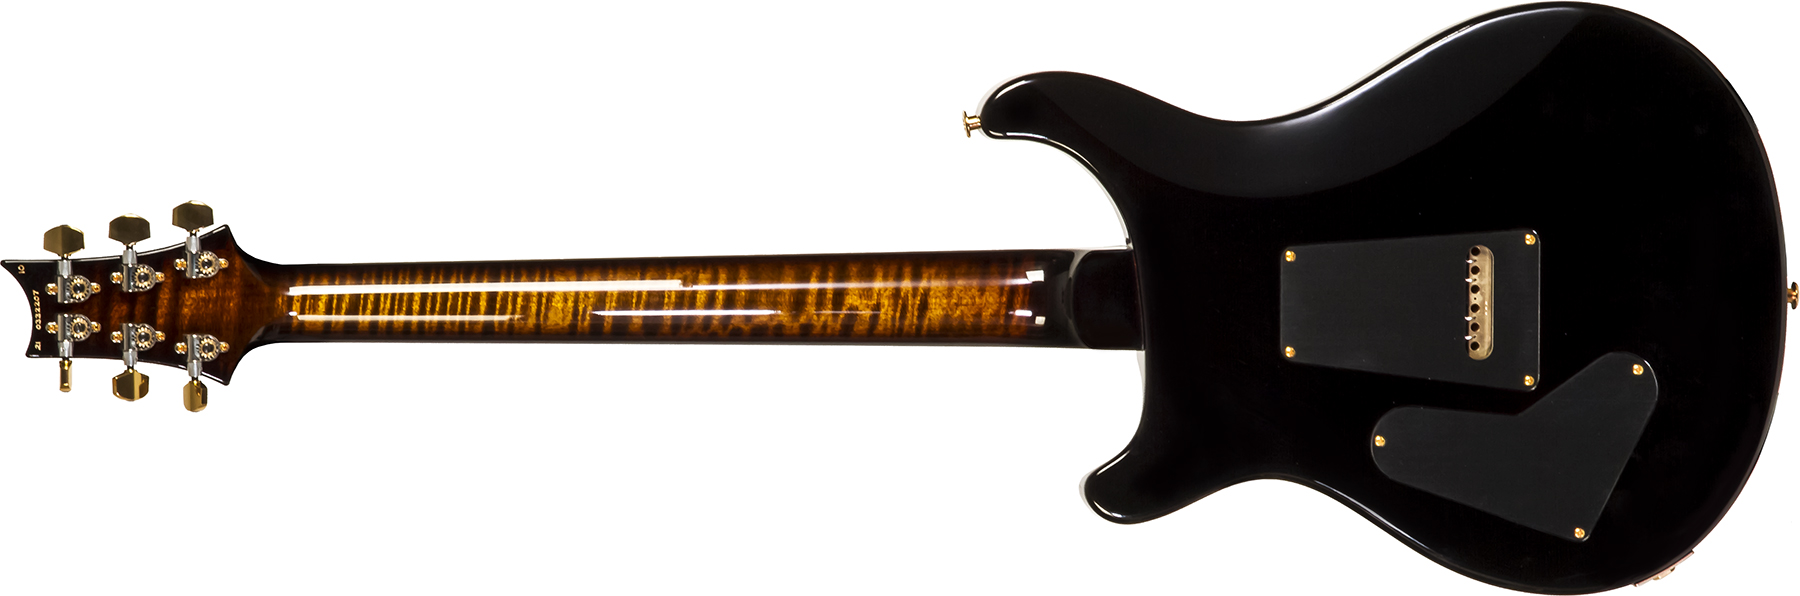 Prs Custom 24 10 Top Usa 2h Trem Rw #21-0332207 - Black Gold Burst - Guitarra eléctrica de doble corte - Variation 1